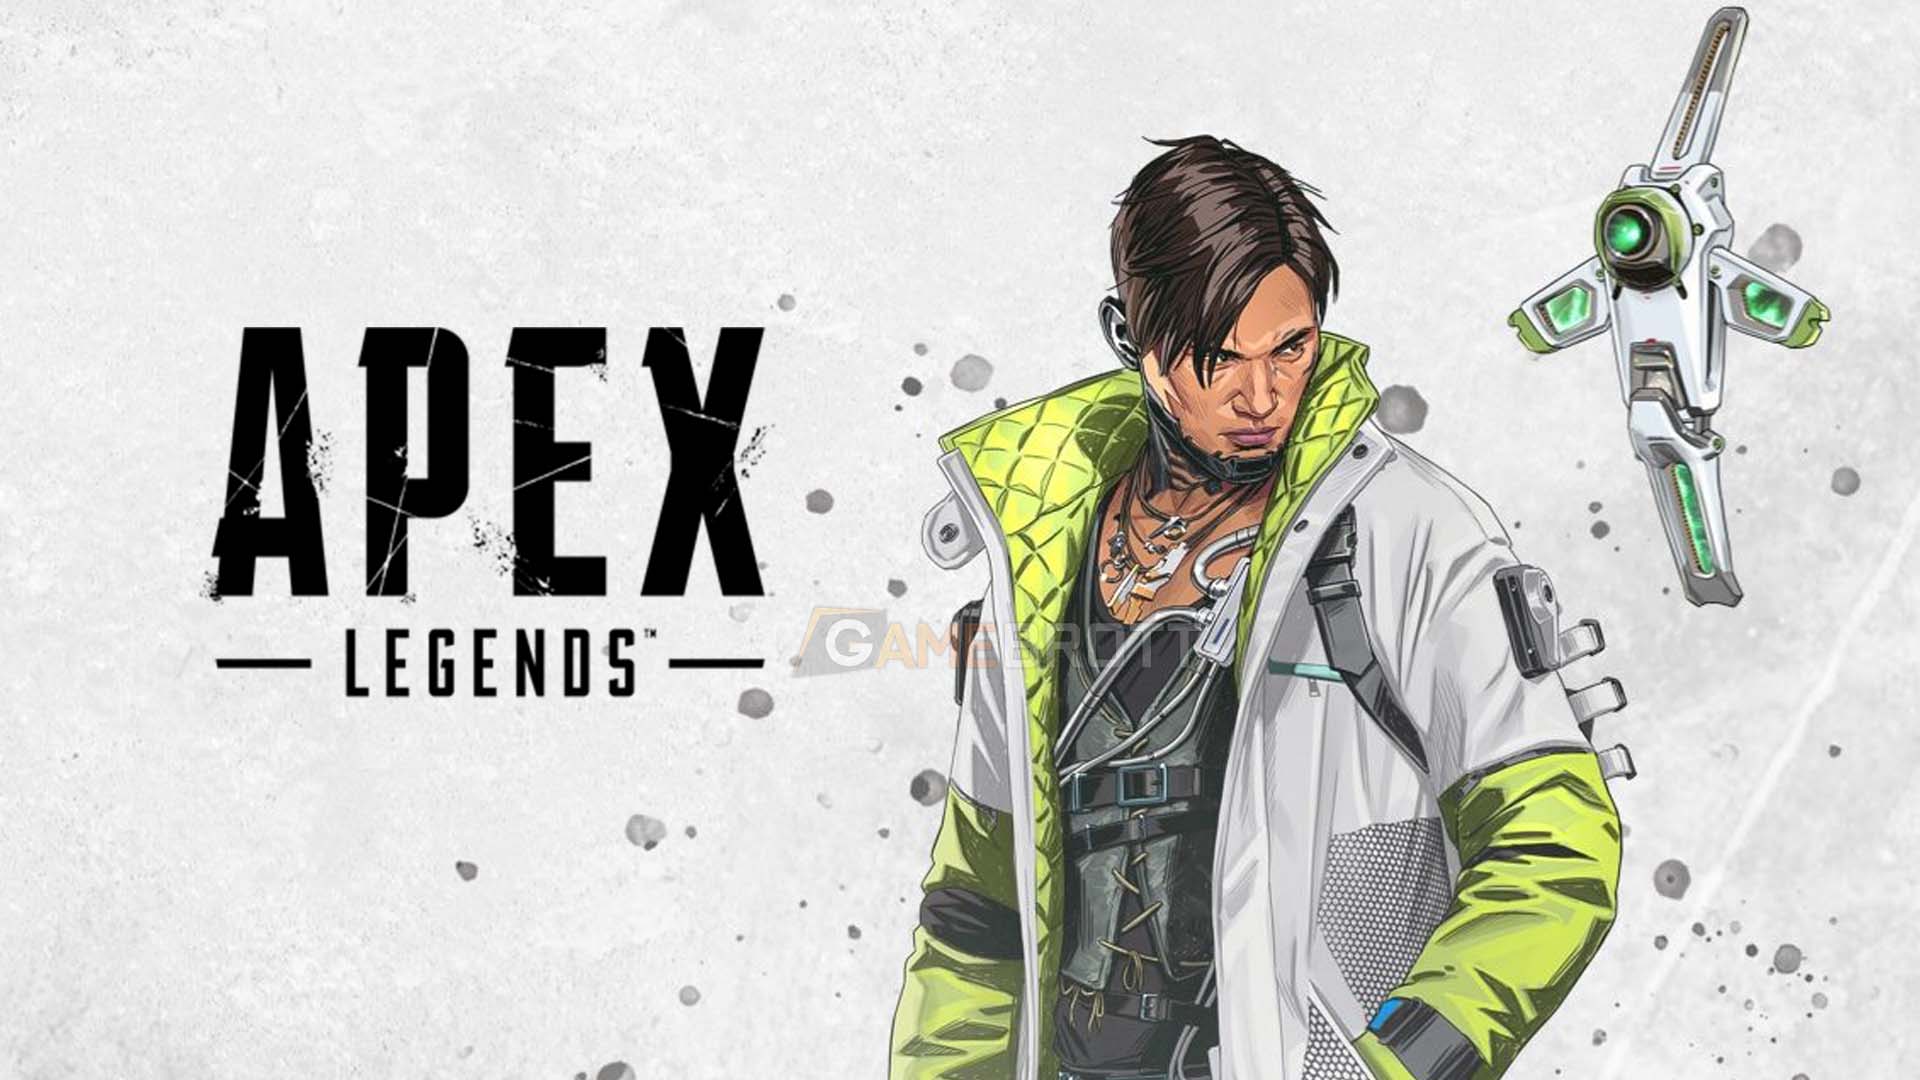 Apex Legends Mobile: Distortion Launch Trailer 